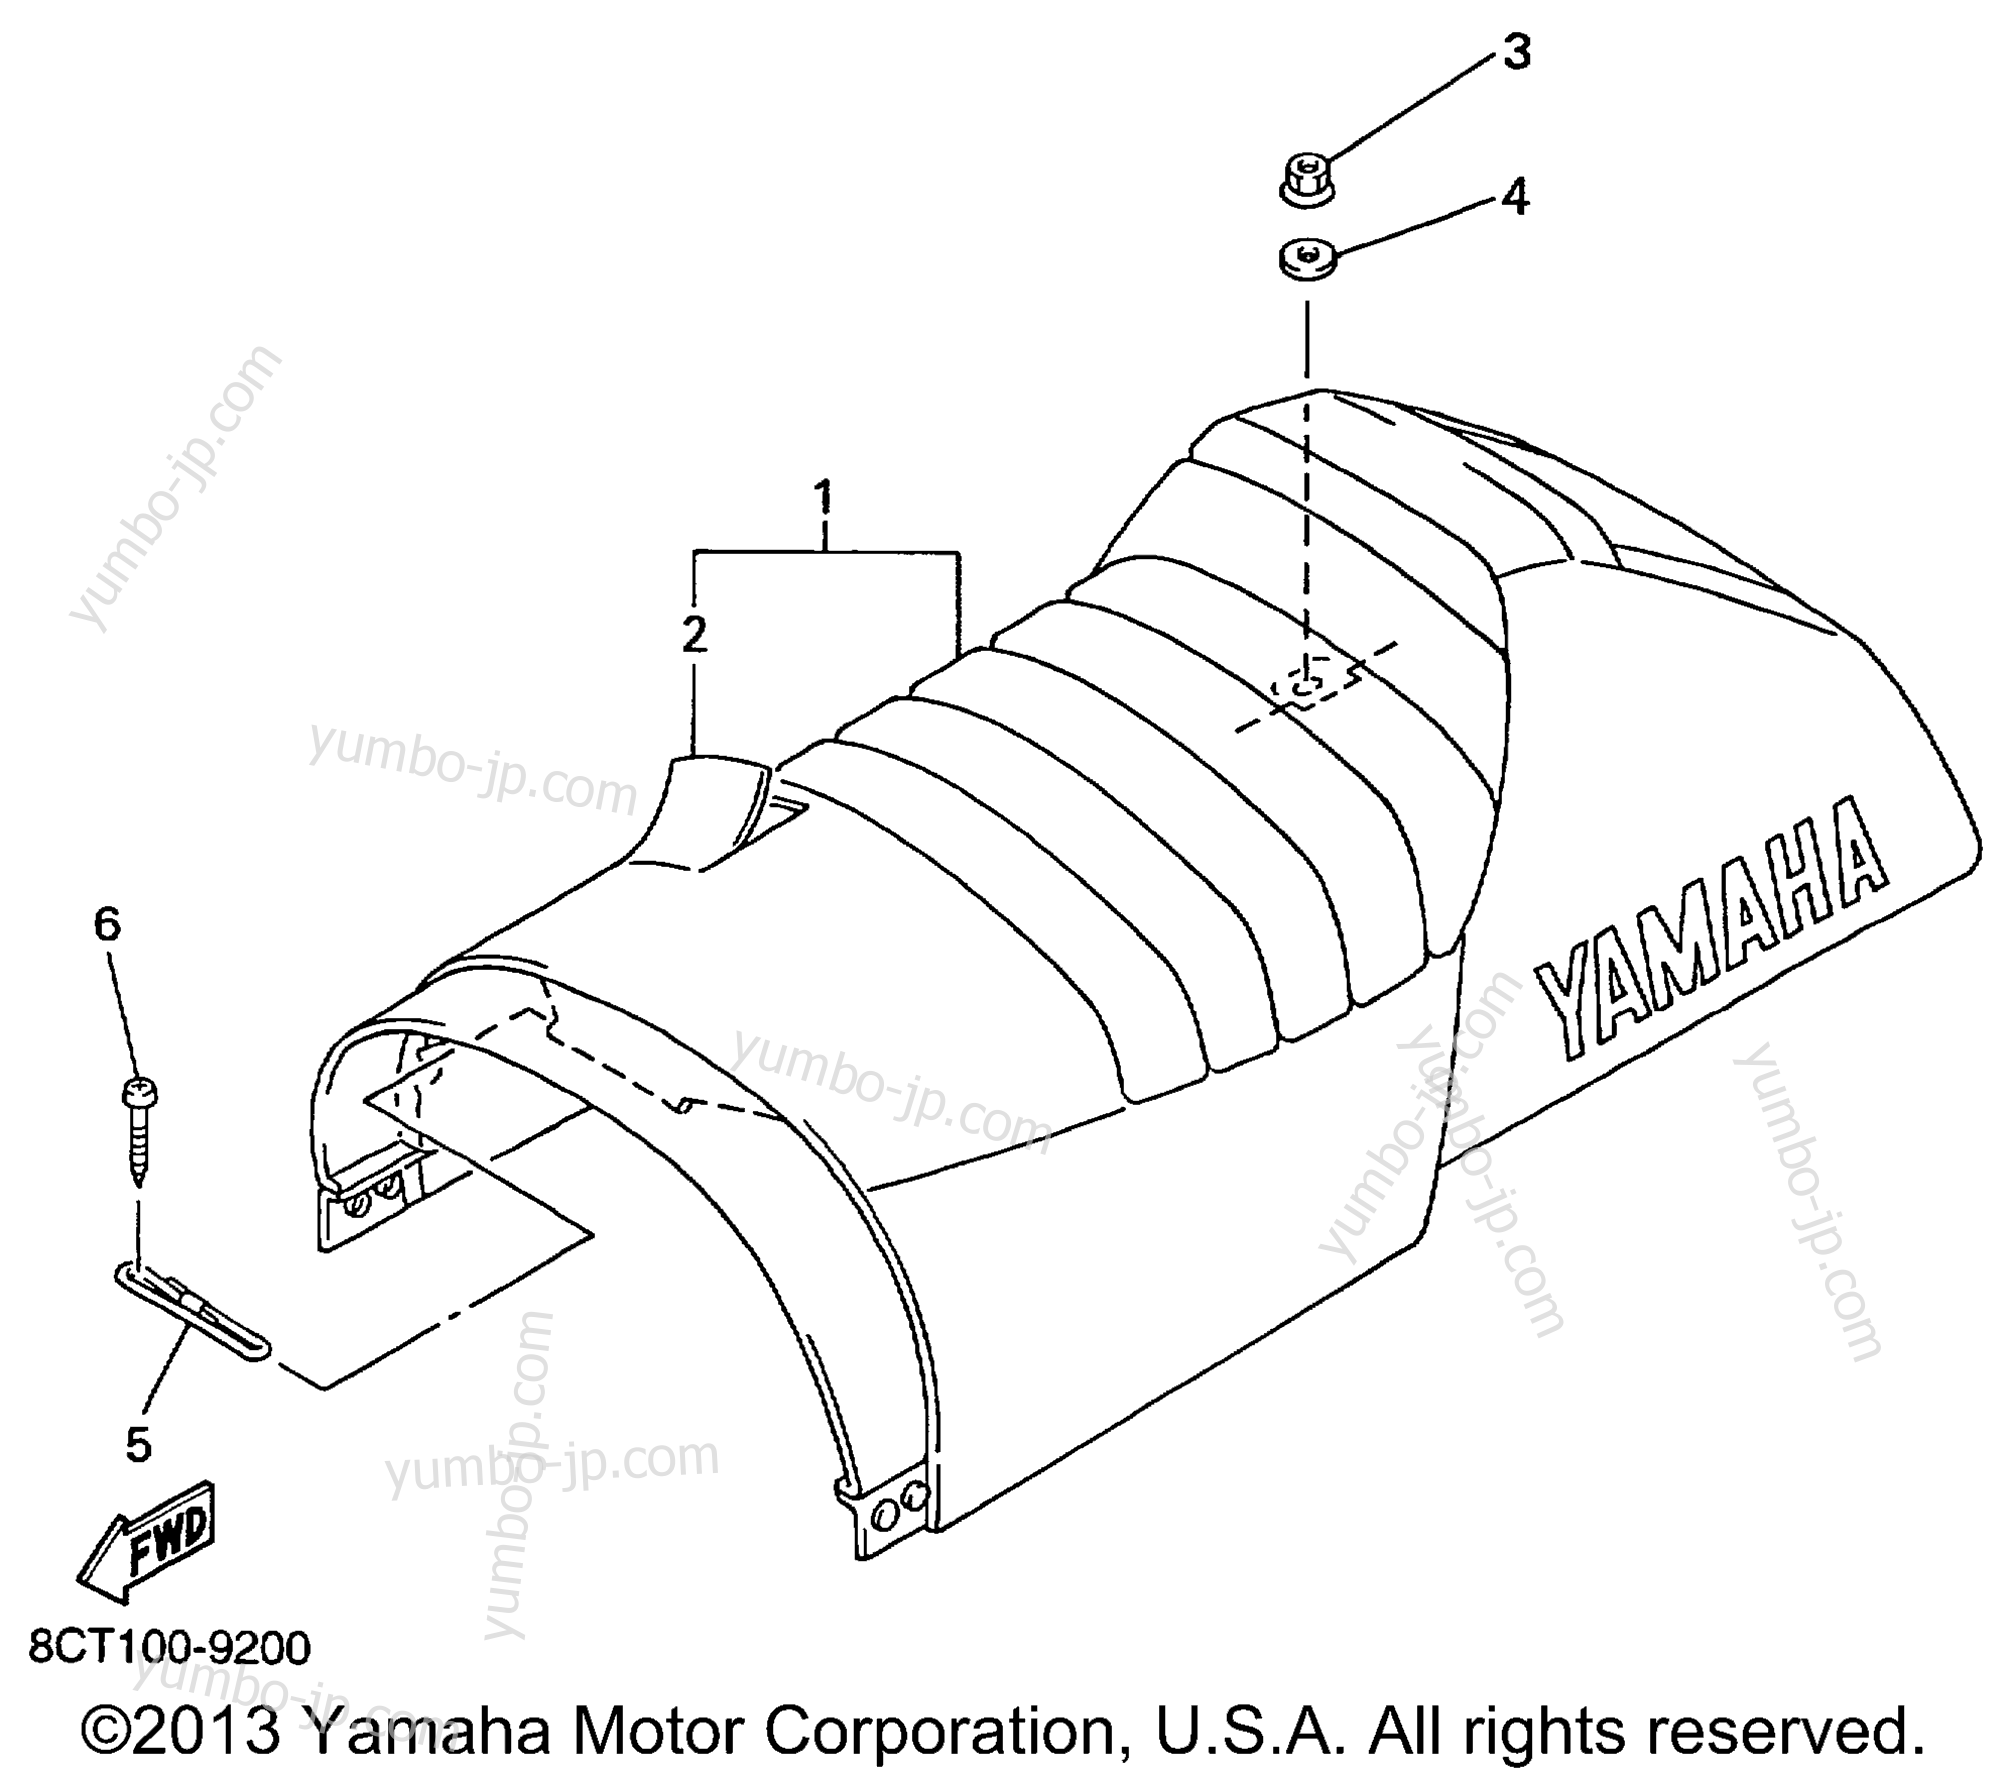 SEAT for snowmobiles YAMAHA VMAX 500 SX (VX500SXBC) 1999 year